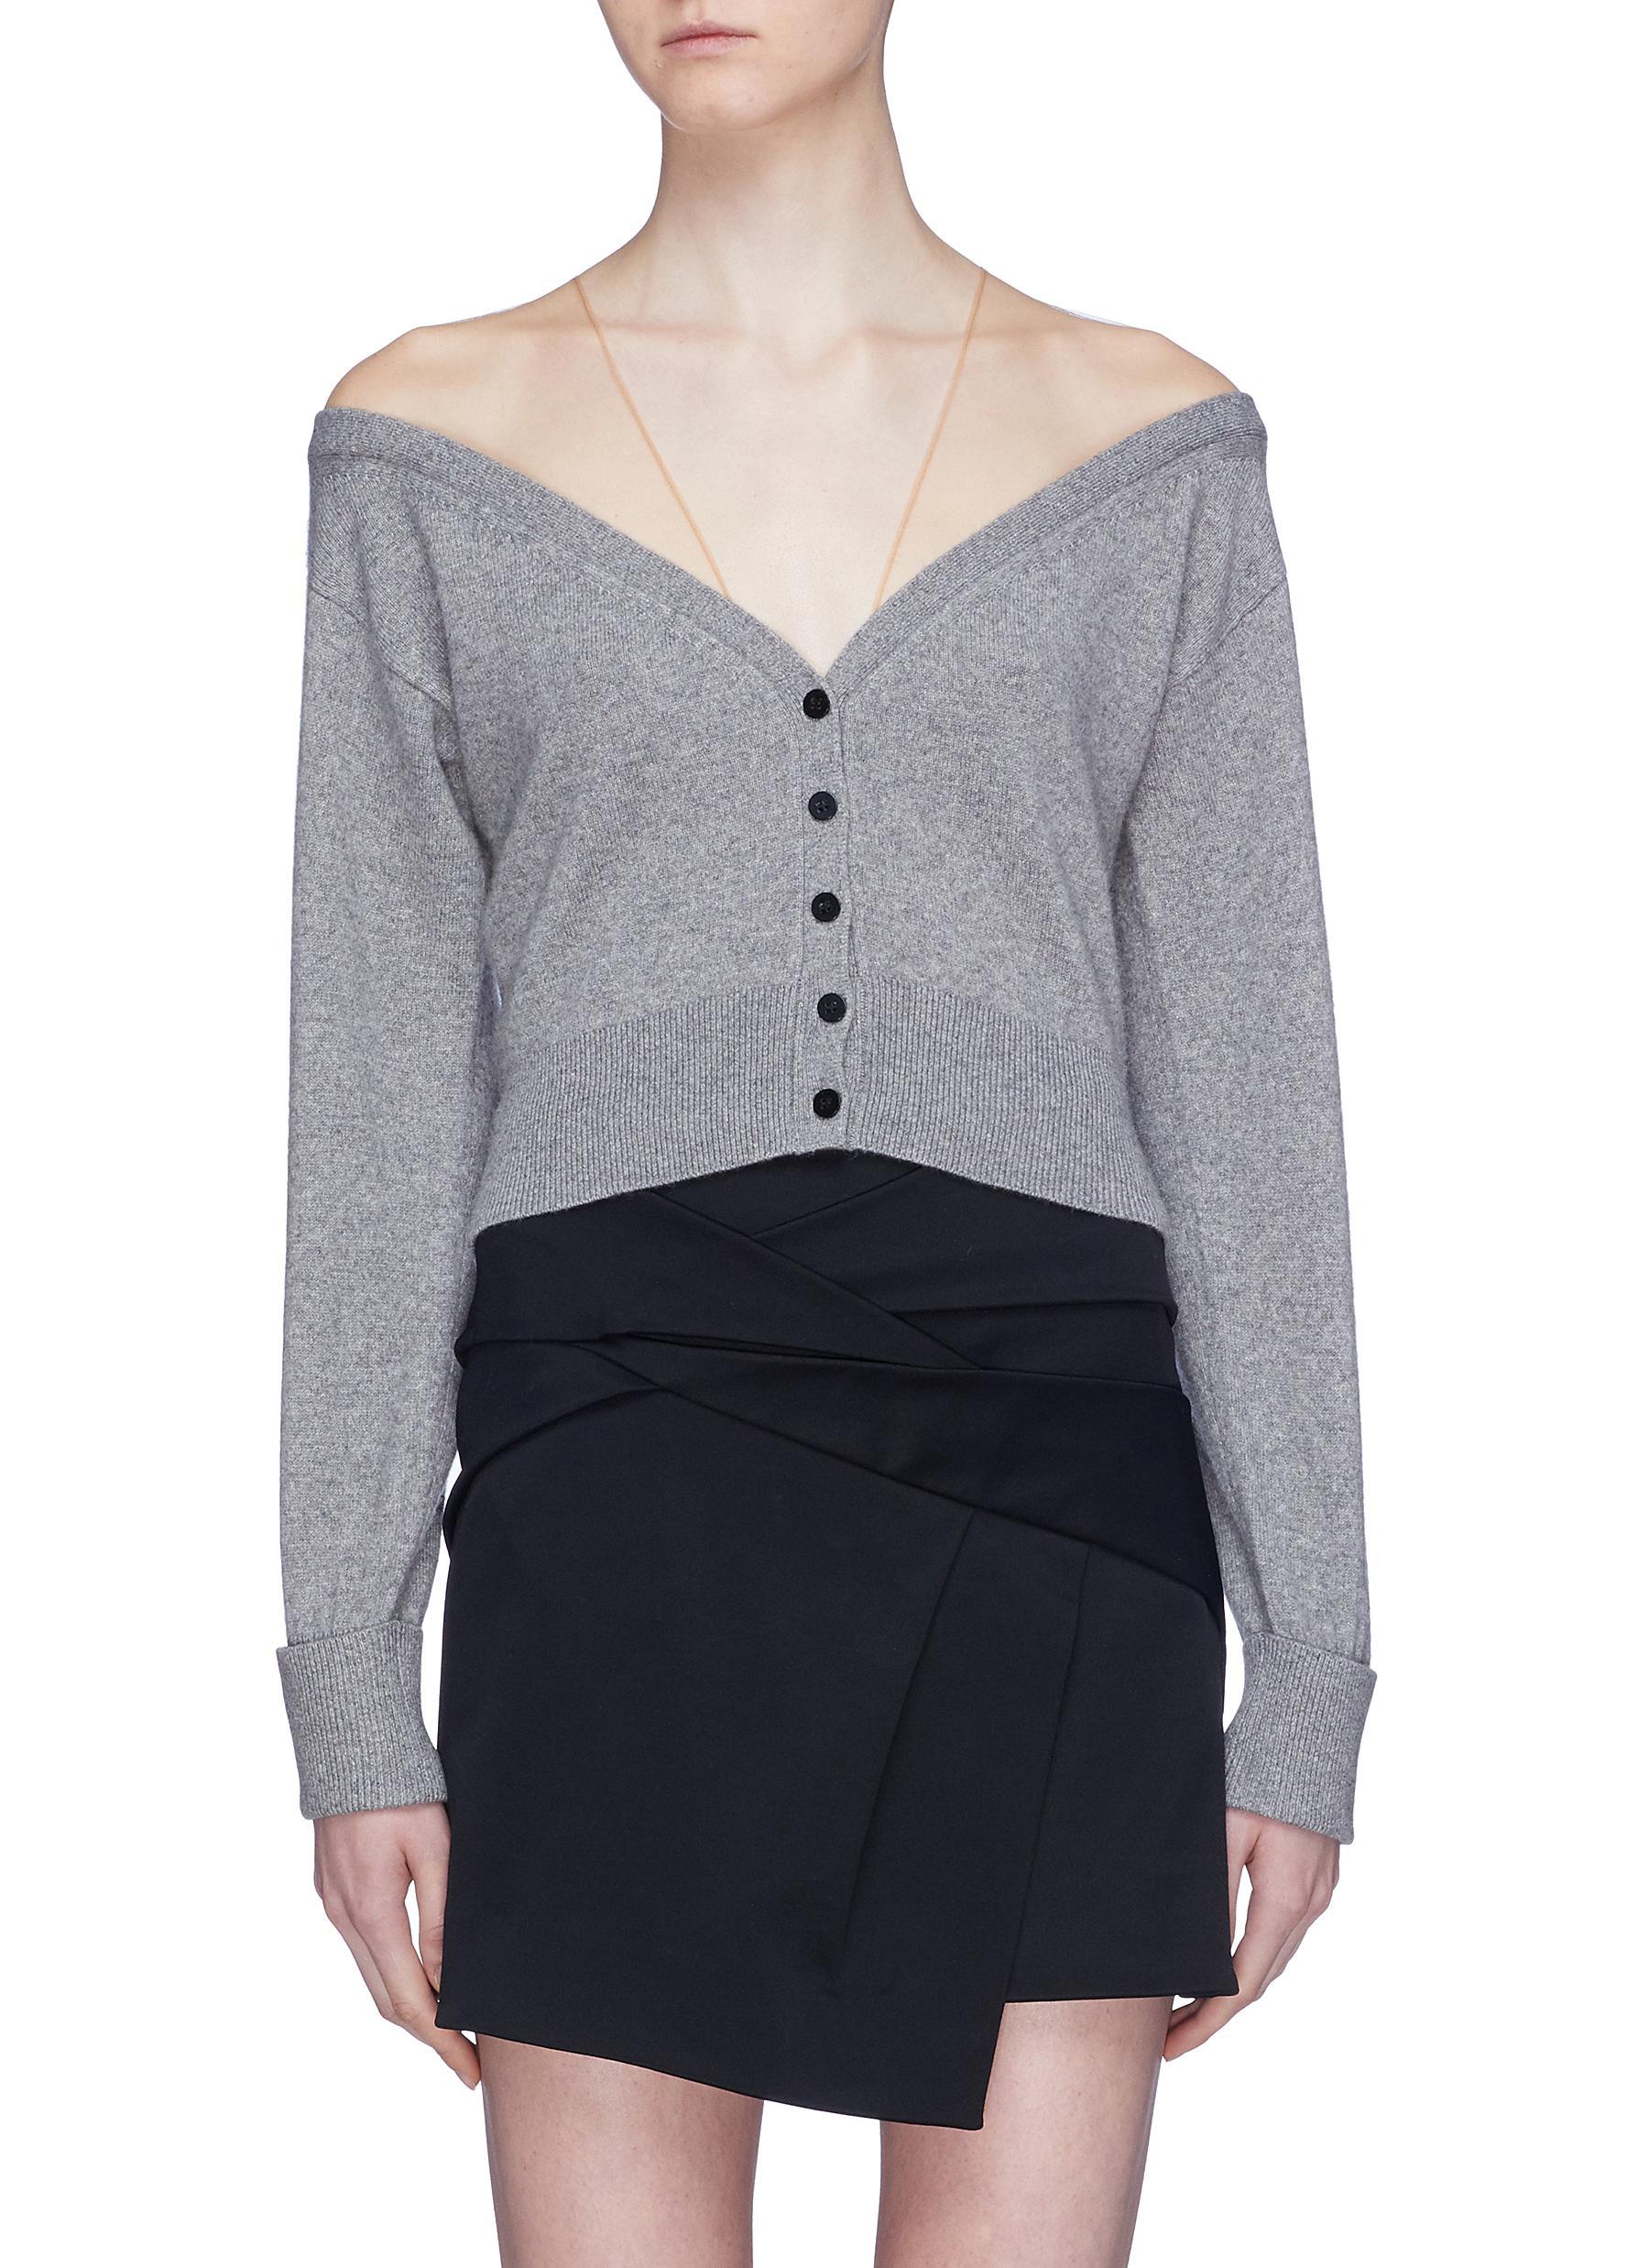 Alexander Wang Wool Mesh Shoulder Panel Cropped Cardigan in Grey (Gray) -  Lyst